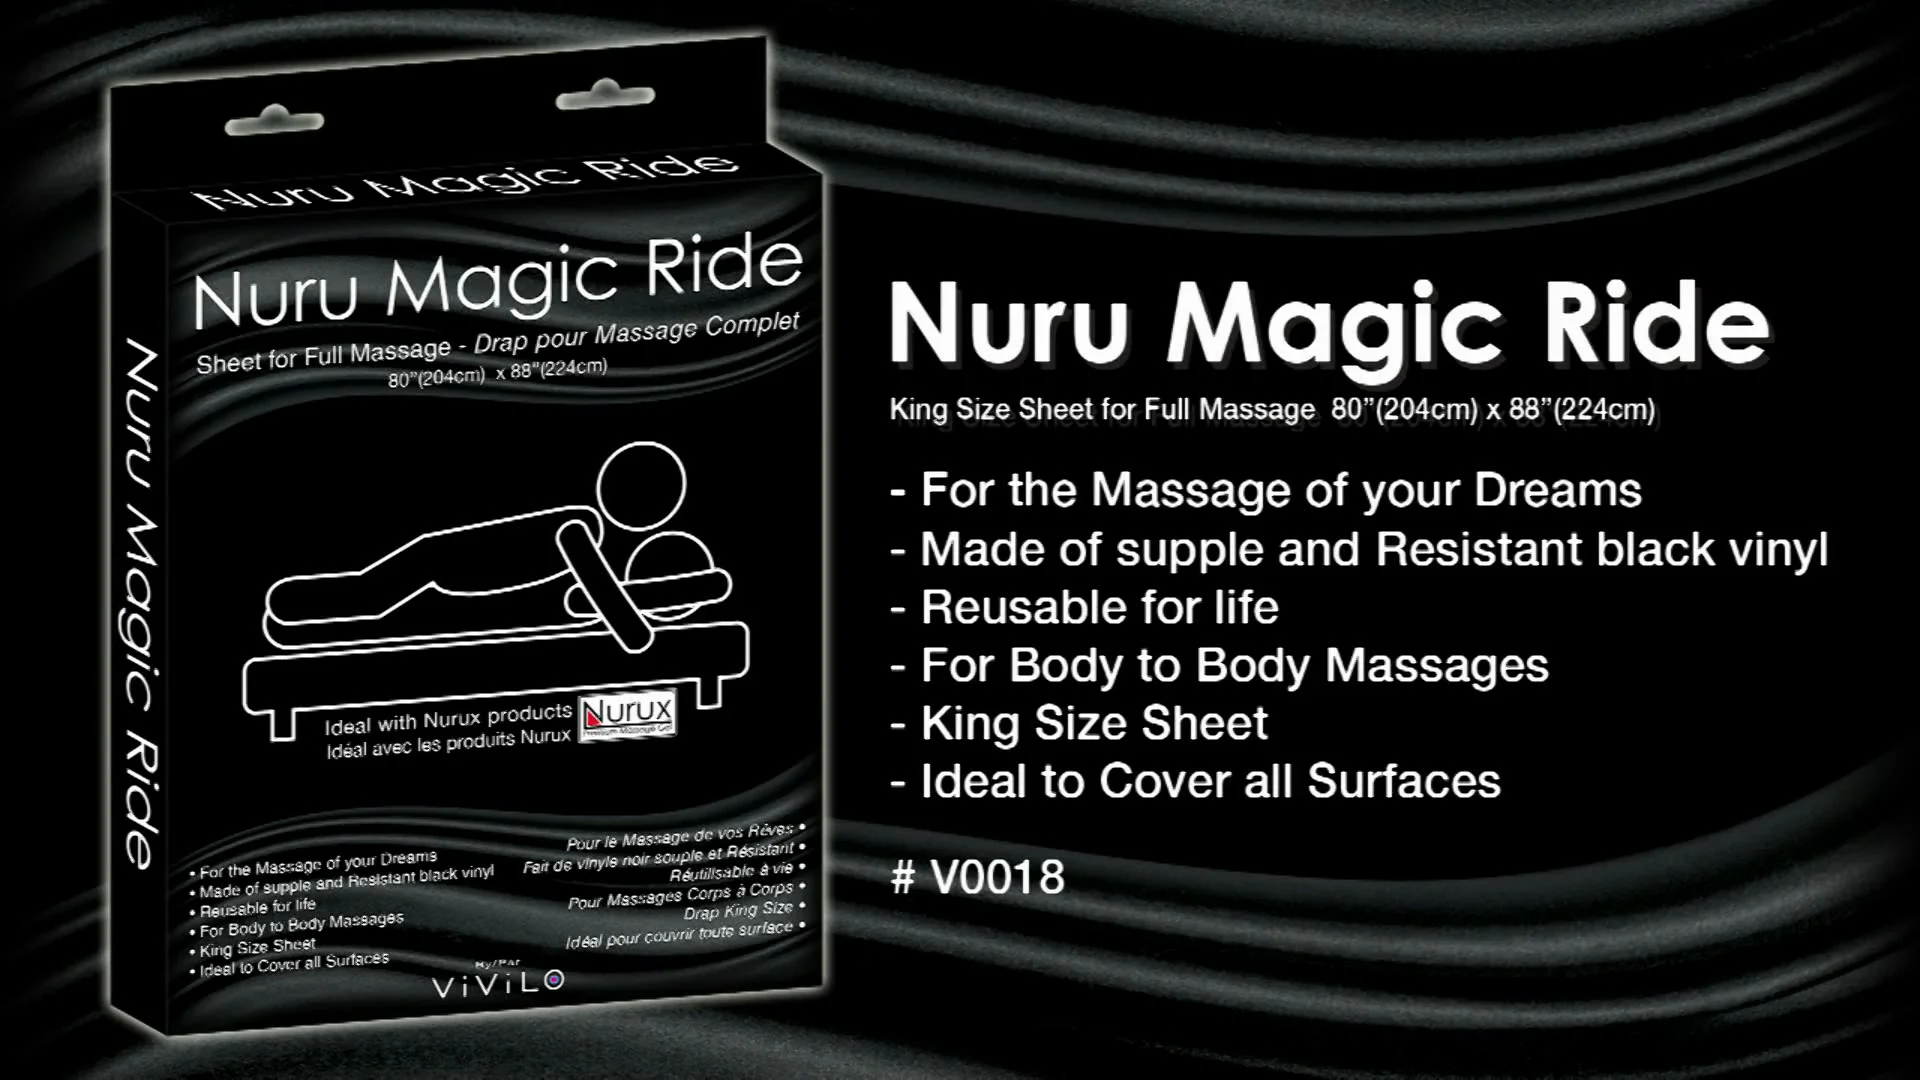 dee bone recommends Real Nuru Massage